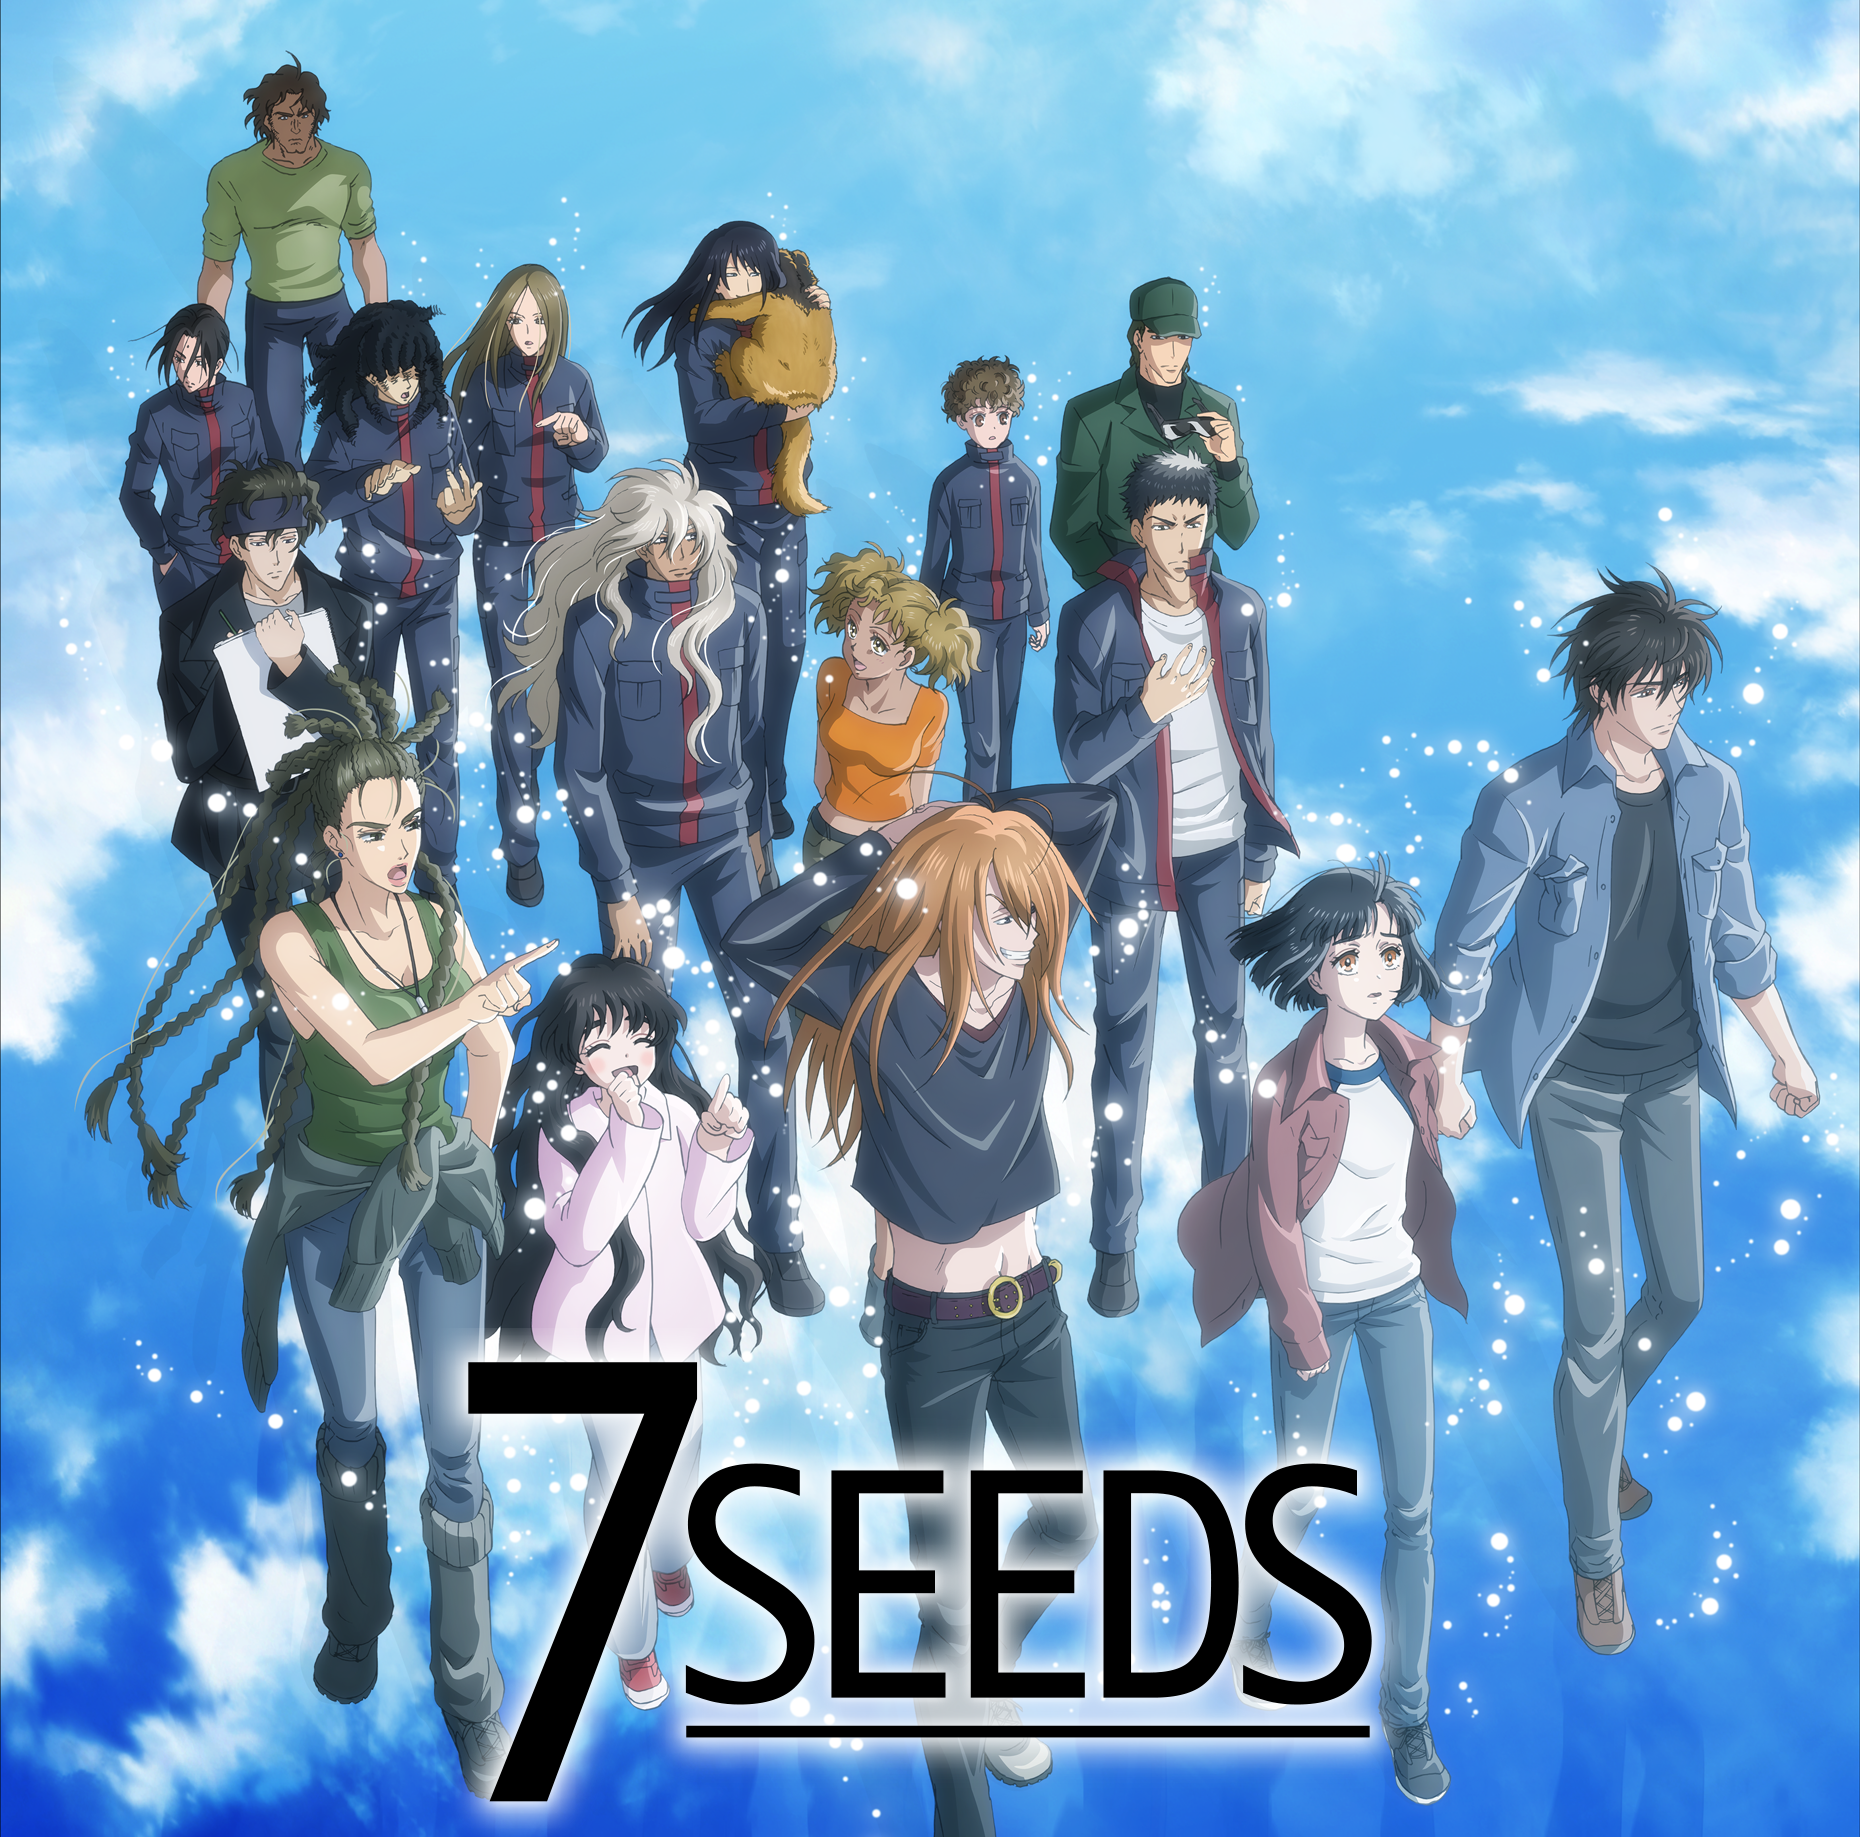 The 7 seasons  アニメ7SEEDS公式サイト